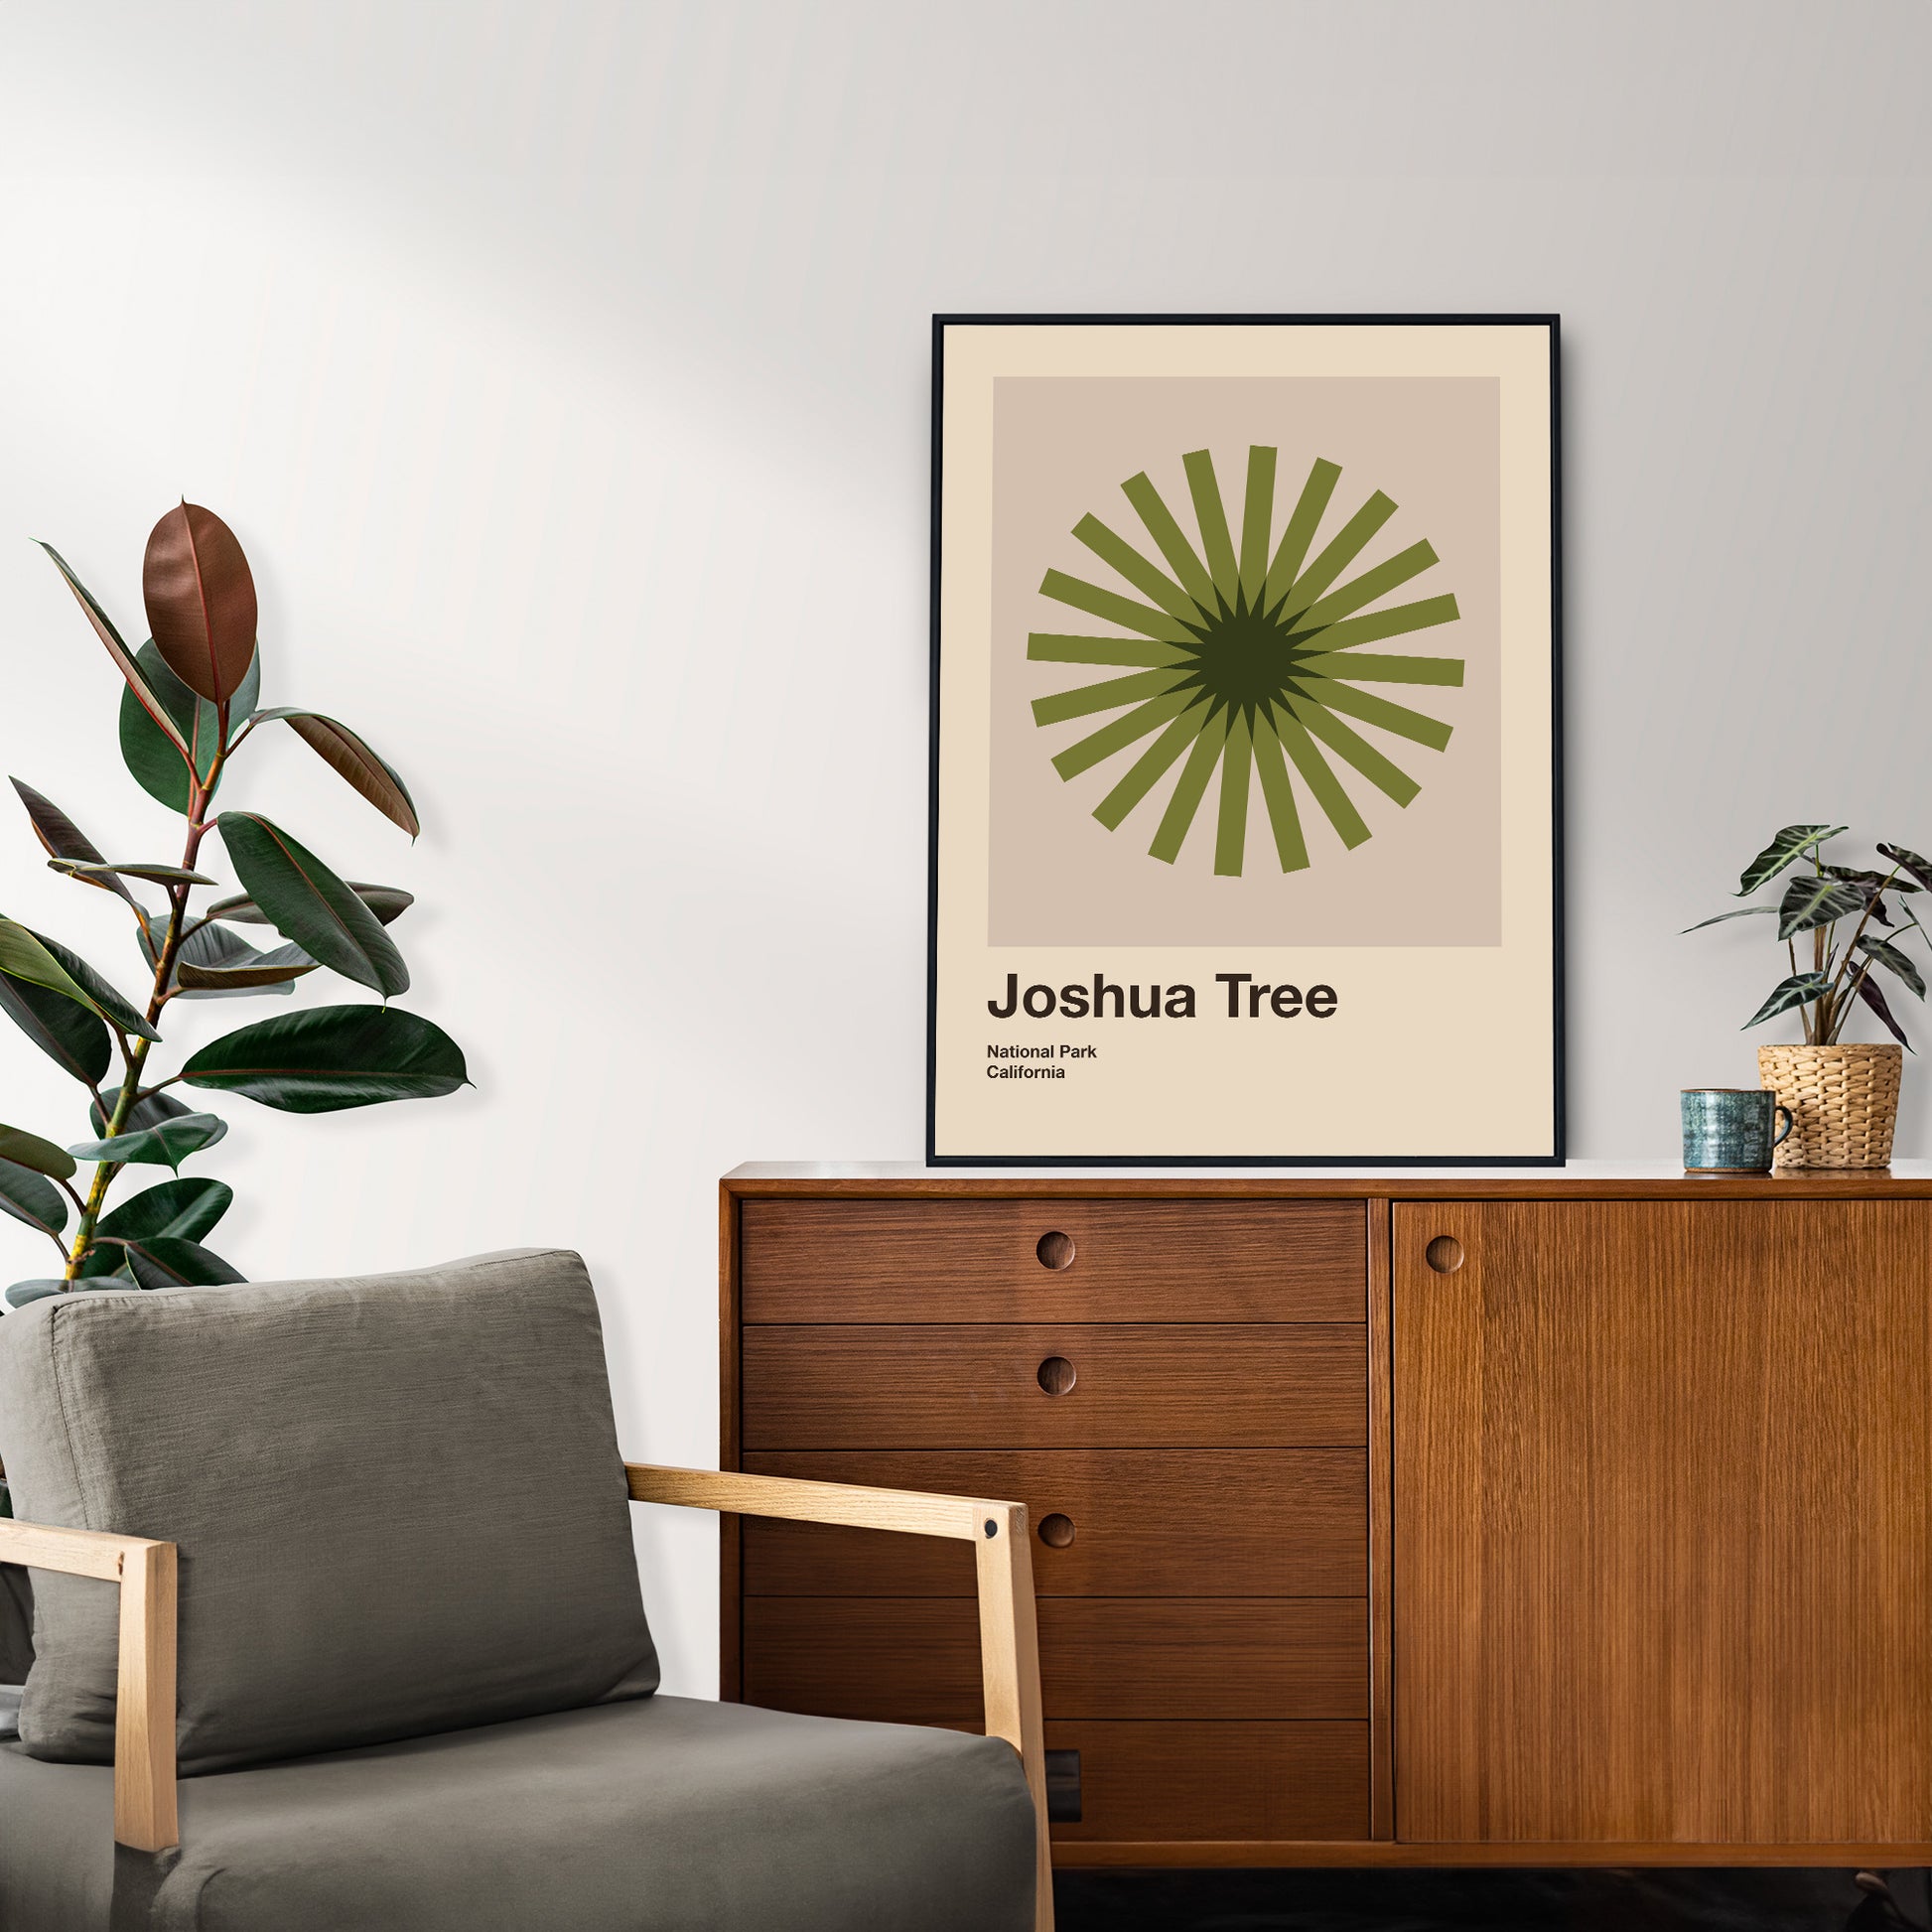 Joshua Tree National Park - Print Arts - joshua tree, national park prints, Travel Poster